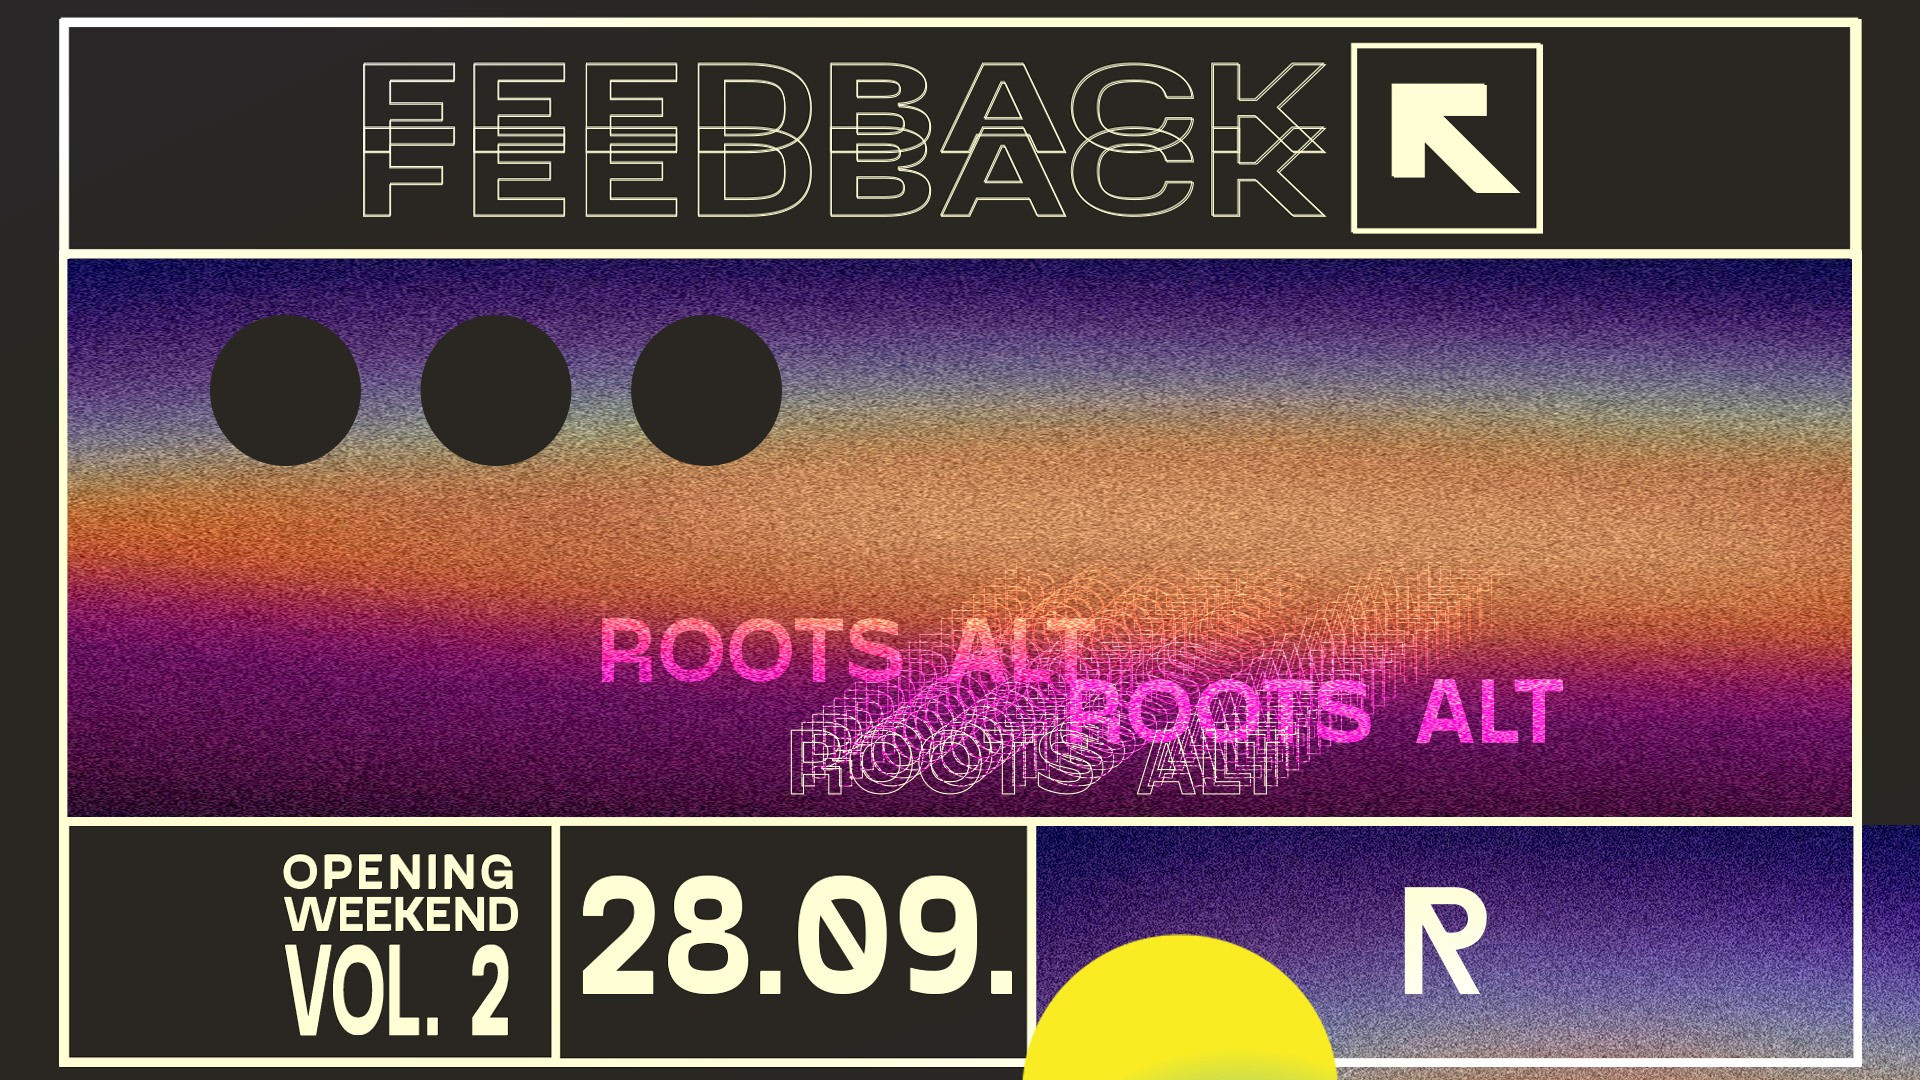 RootsAlt - Season opening vol 2 - 28. Sep - Feedback